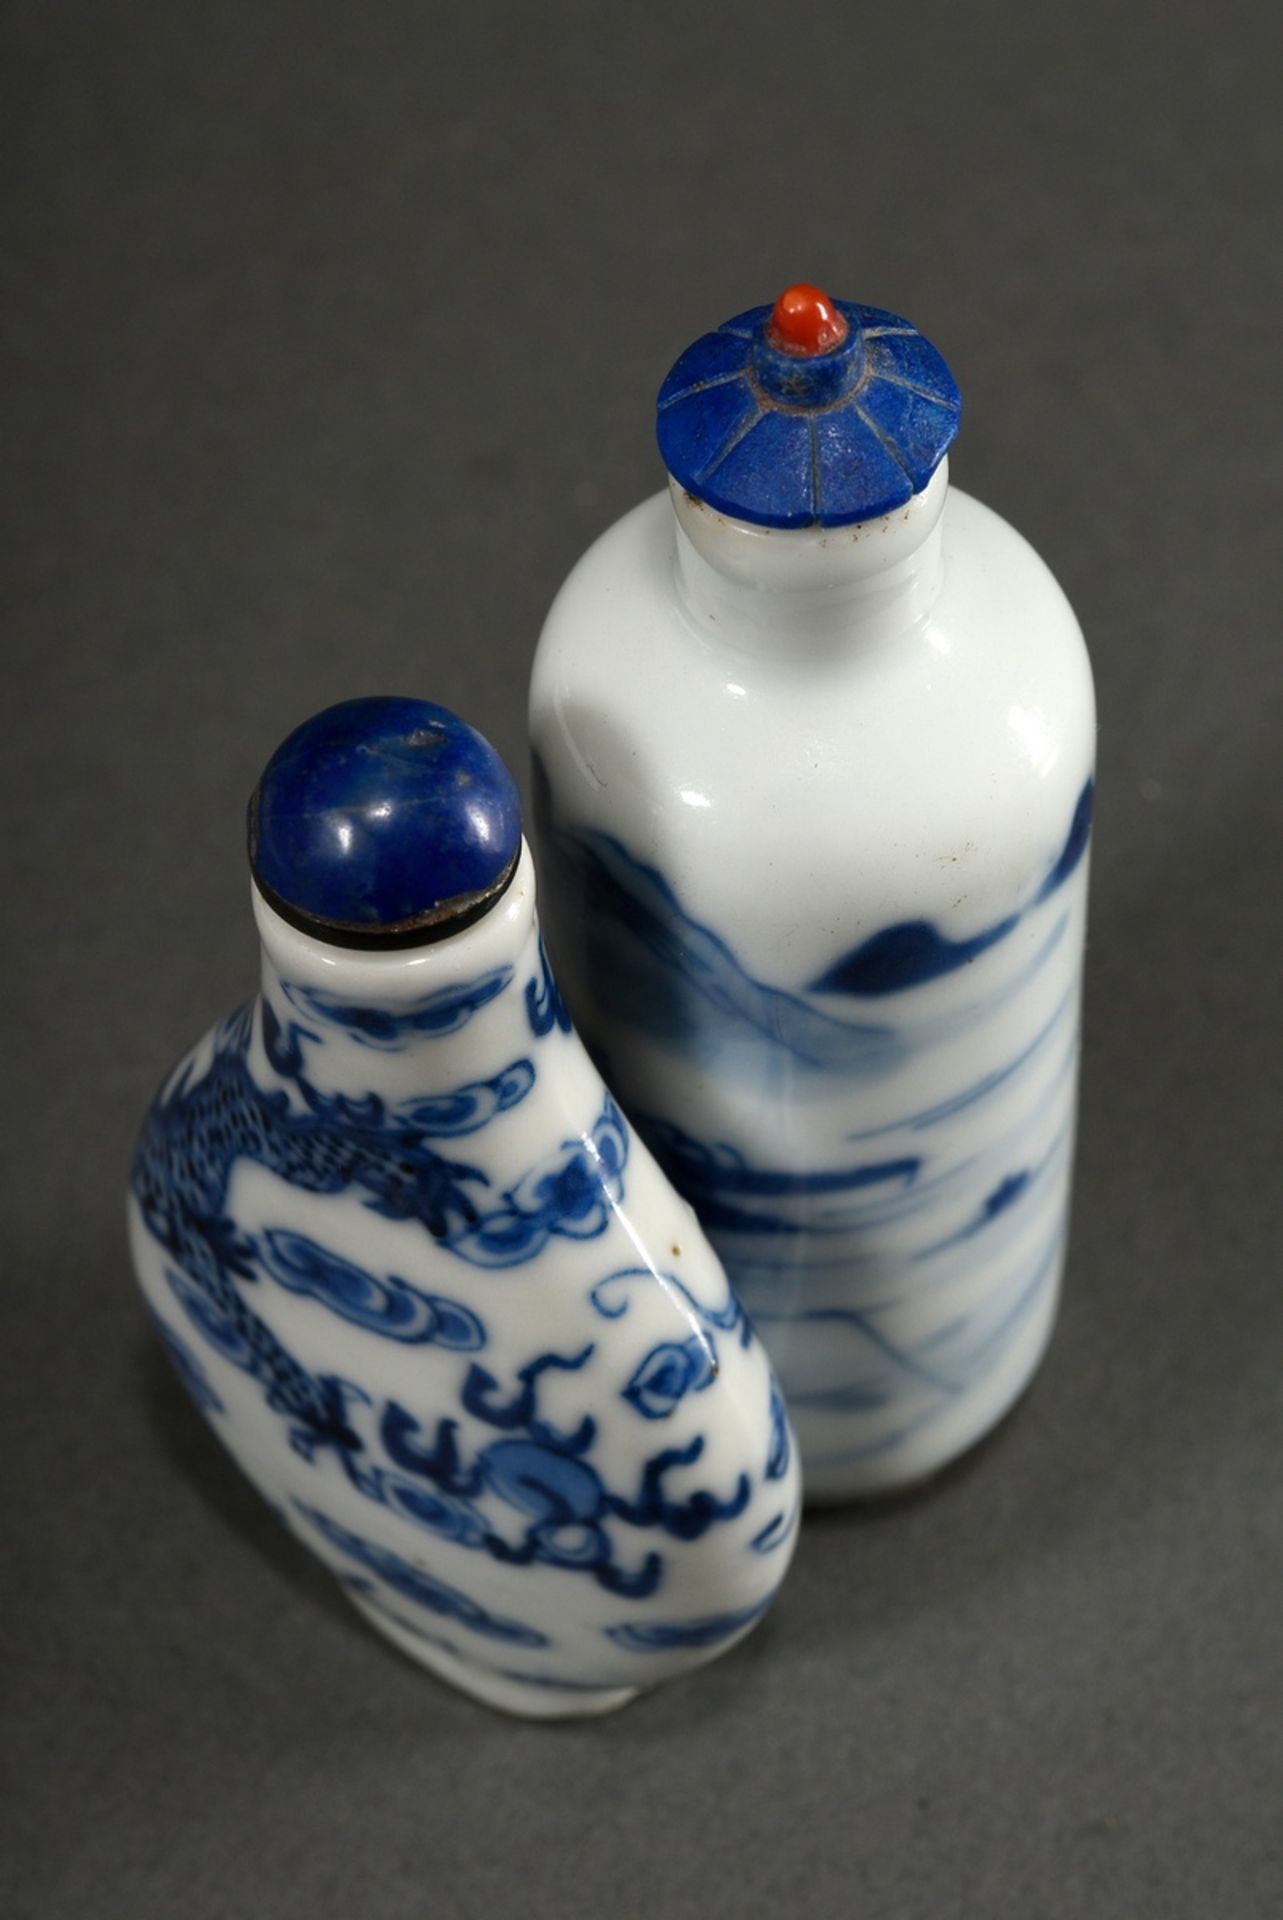 2 Diverse Porzellan Snuffbottles mit Blaumalerei Dekor, China 19.Jh.: "Angler in Flußlandschaft vor - Bild 4 aus 5